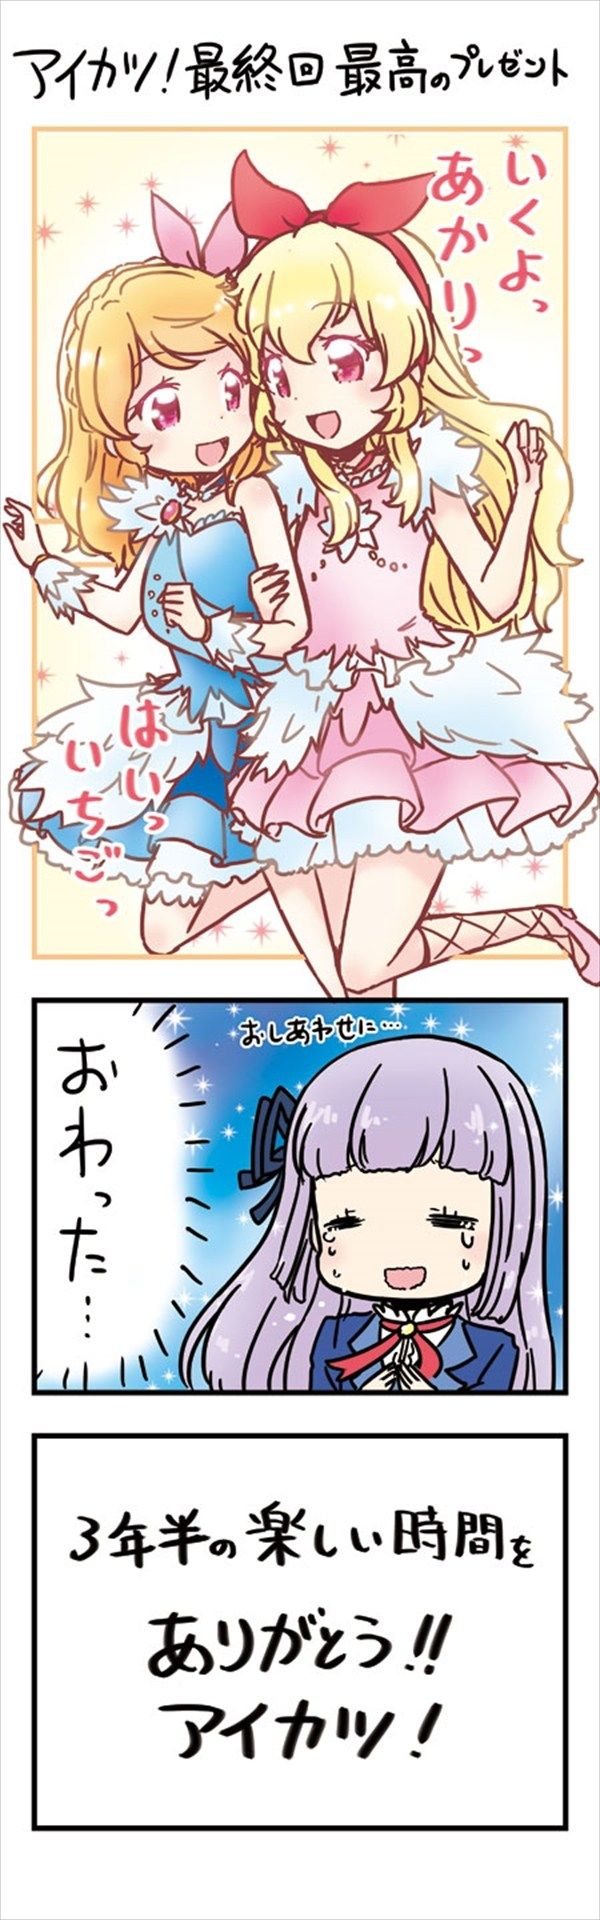 [Rainbow erotic images] is katsu! Of stars MEW momomiya Ichigo Strawberry-CHAN's collection of fine erotic cute illustrations! www 45 | Part2 16